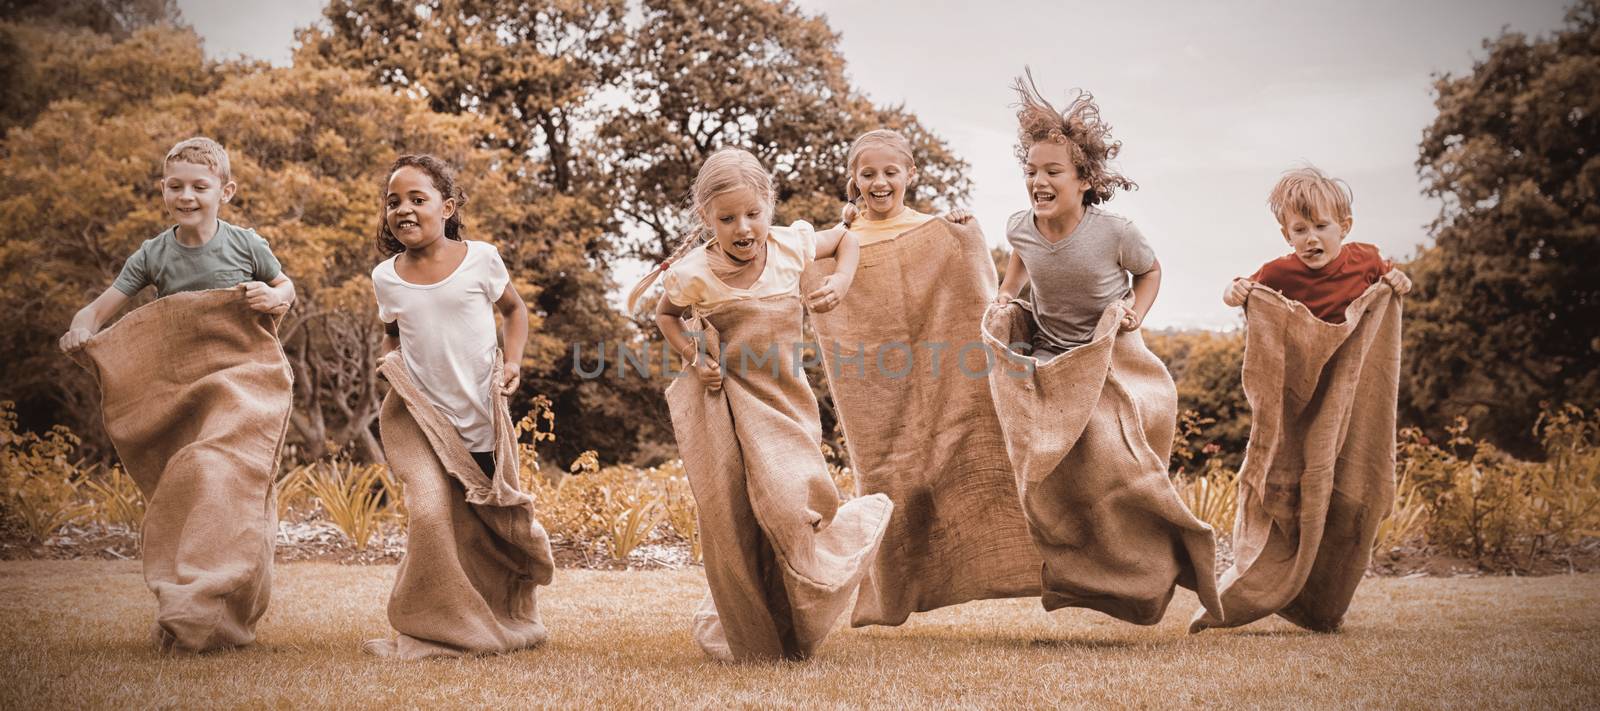 Children having a sack race in park by Wavebreakmedia